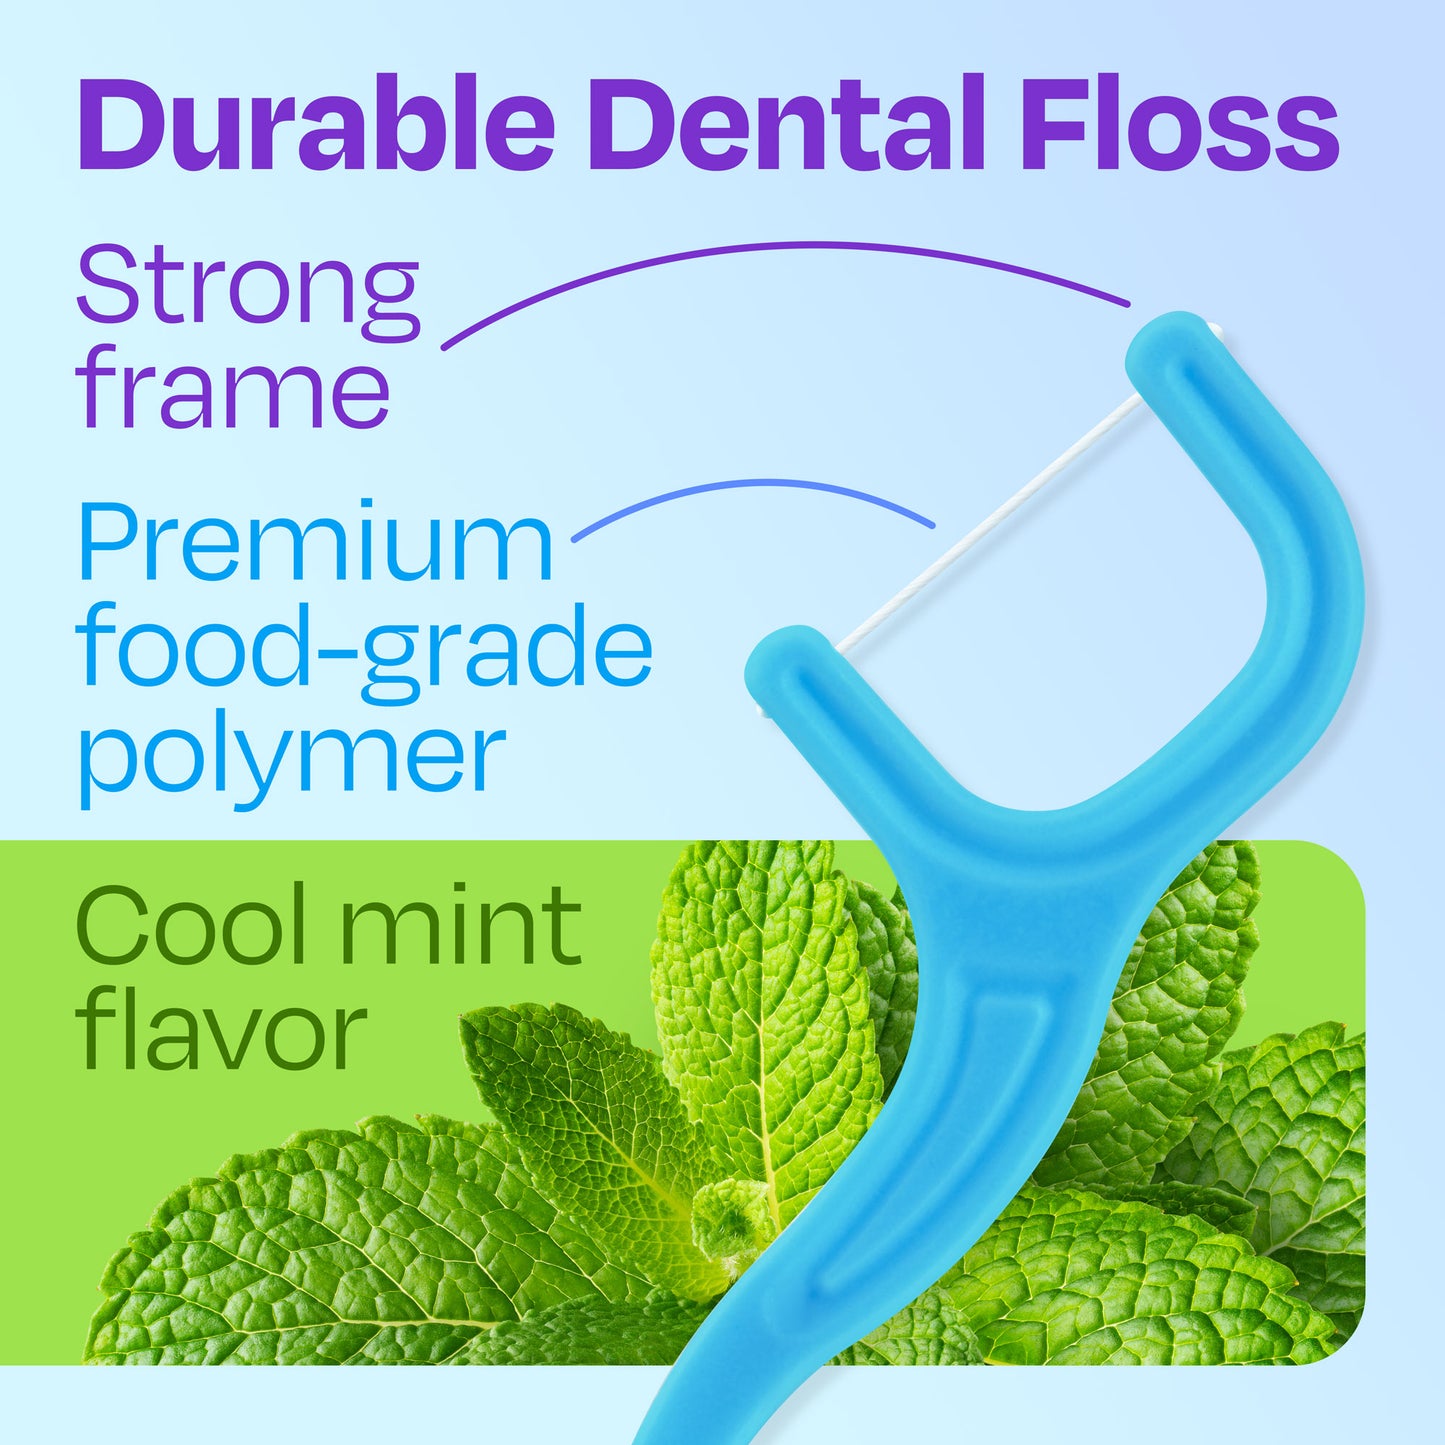 Trueocity Dental Flossers Brush Picks 4 Pack w/ Travel Case (200 Total Count), Dental Floss Glides Easy Between Teeth, Flosser Helps Prevent Tooth Decay & Gum Disease, Easy Grip Handle, Mint Flavored